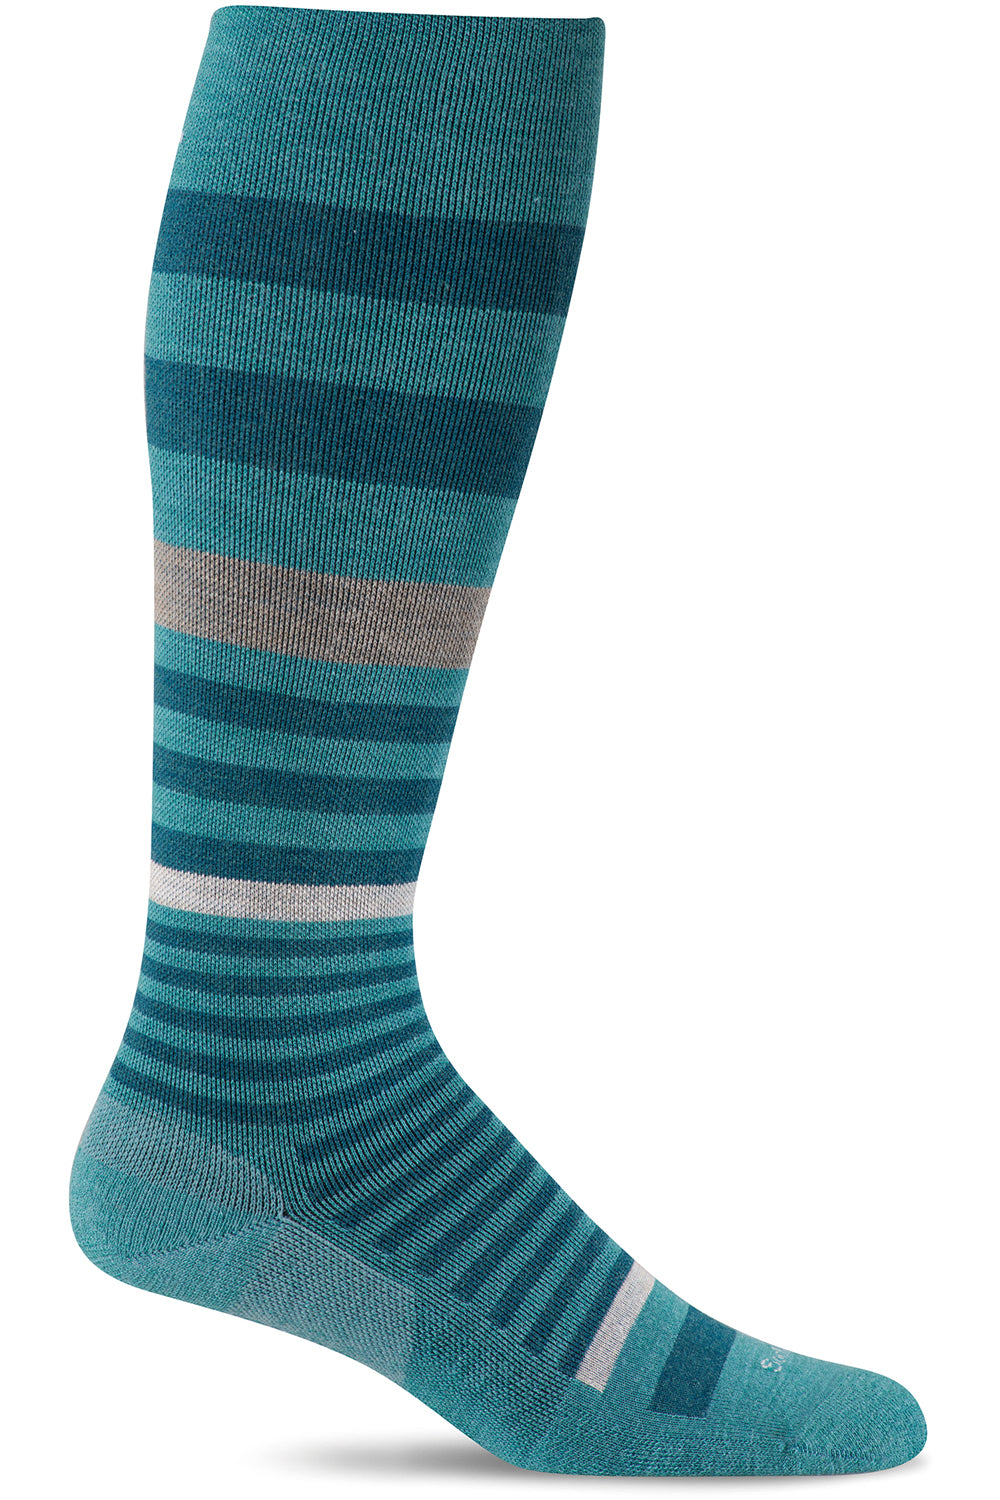 Sockwell Women's Orbital Stripe Sock in Mineral color from the side